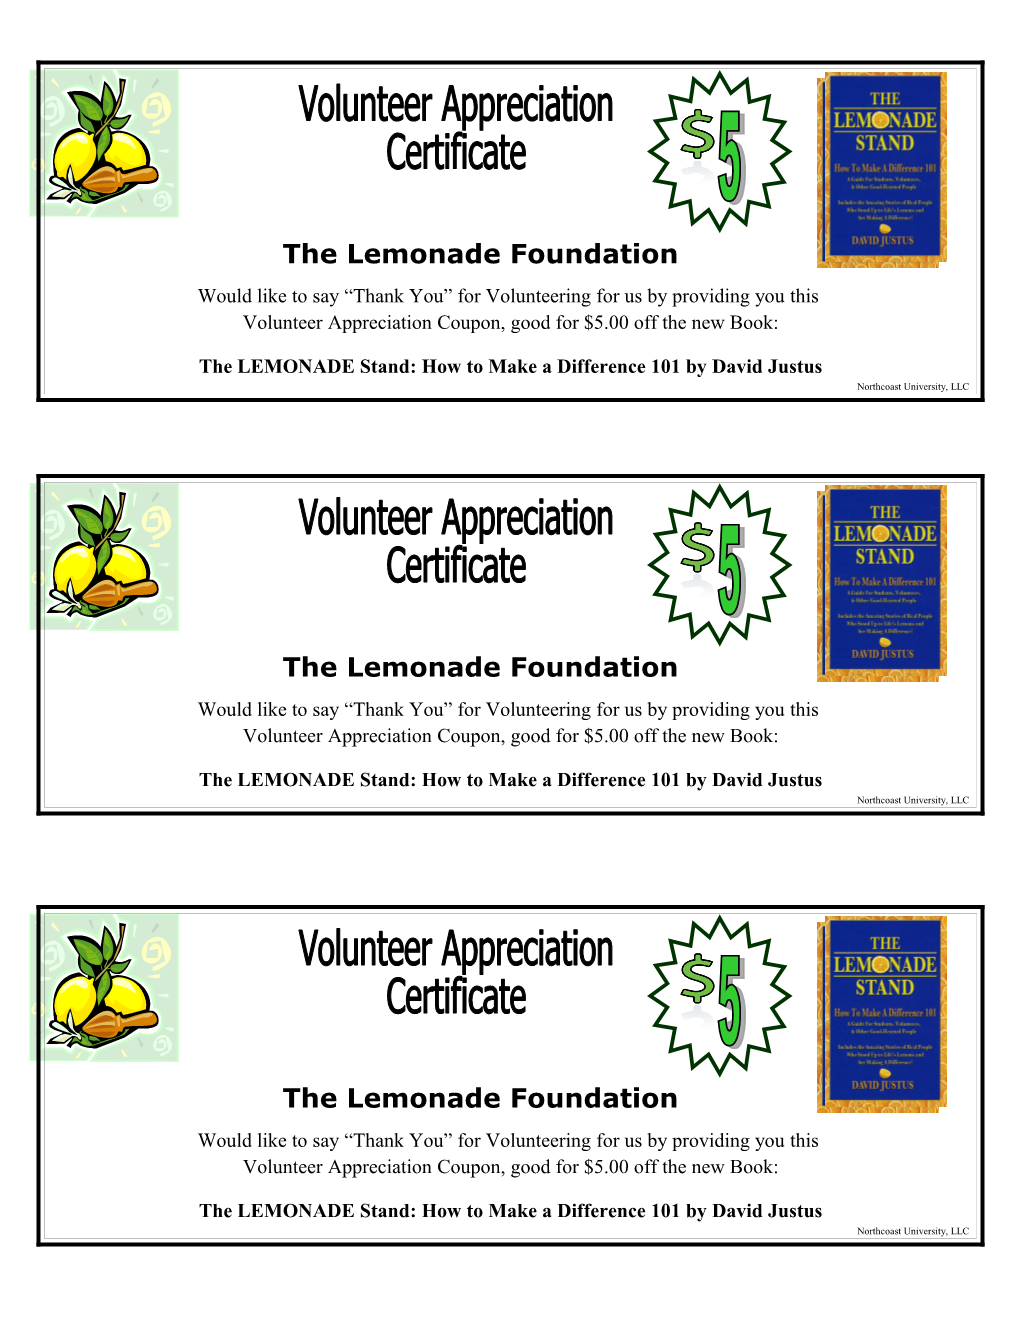 The Lemonade Foundation